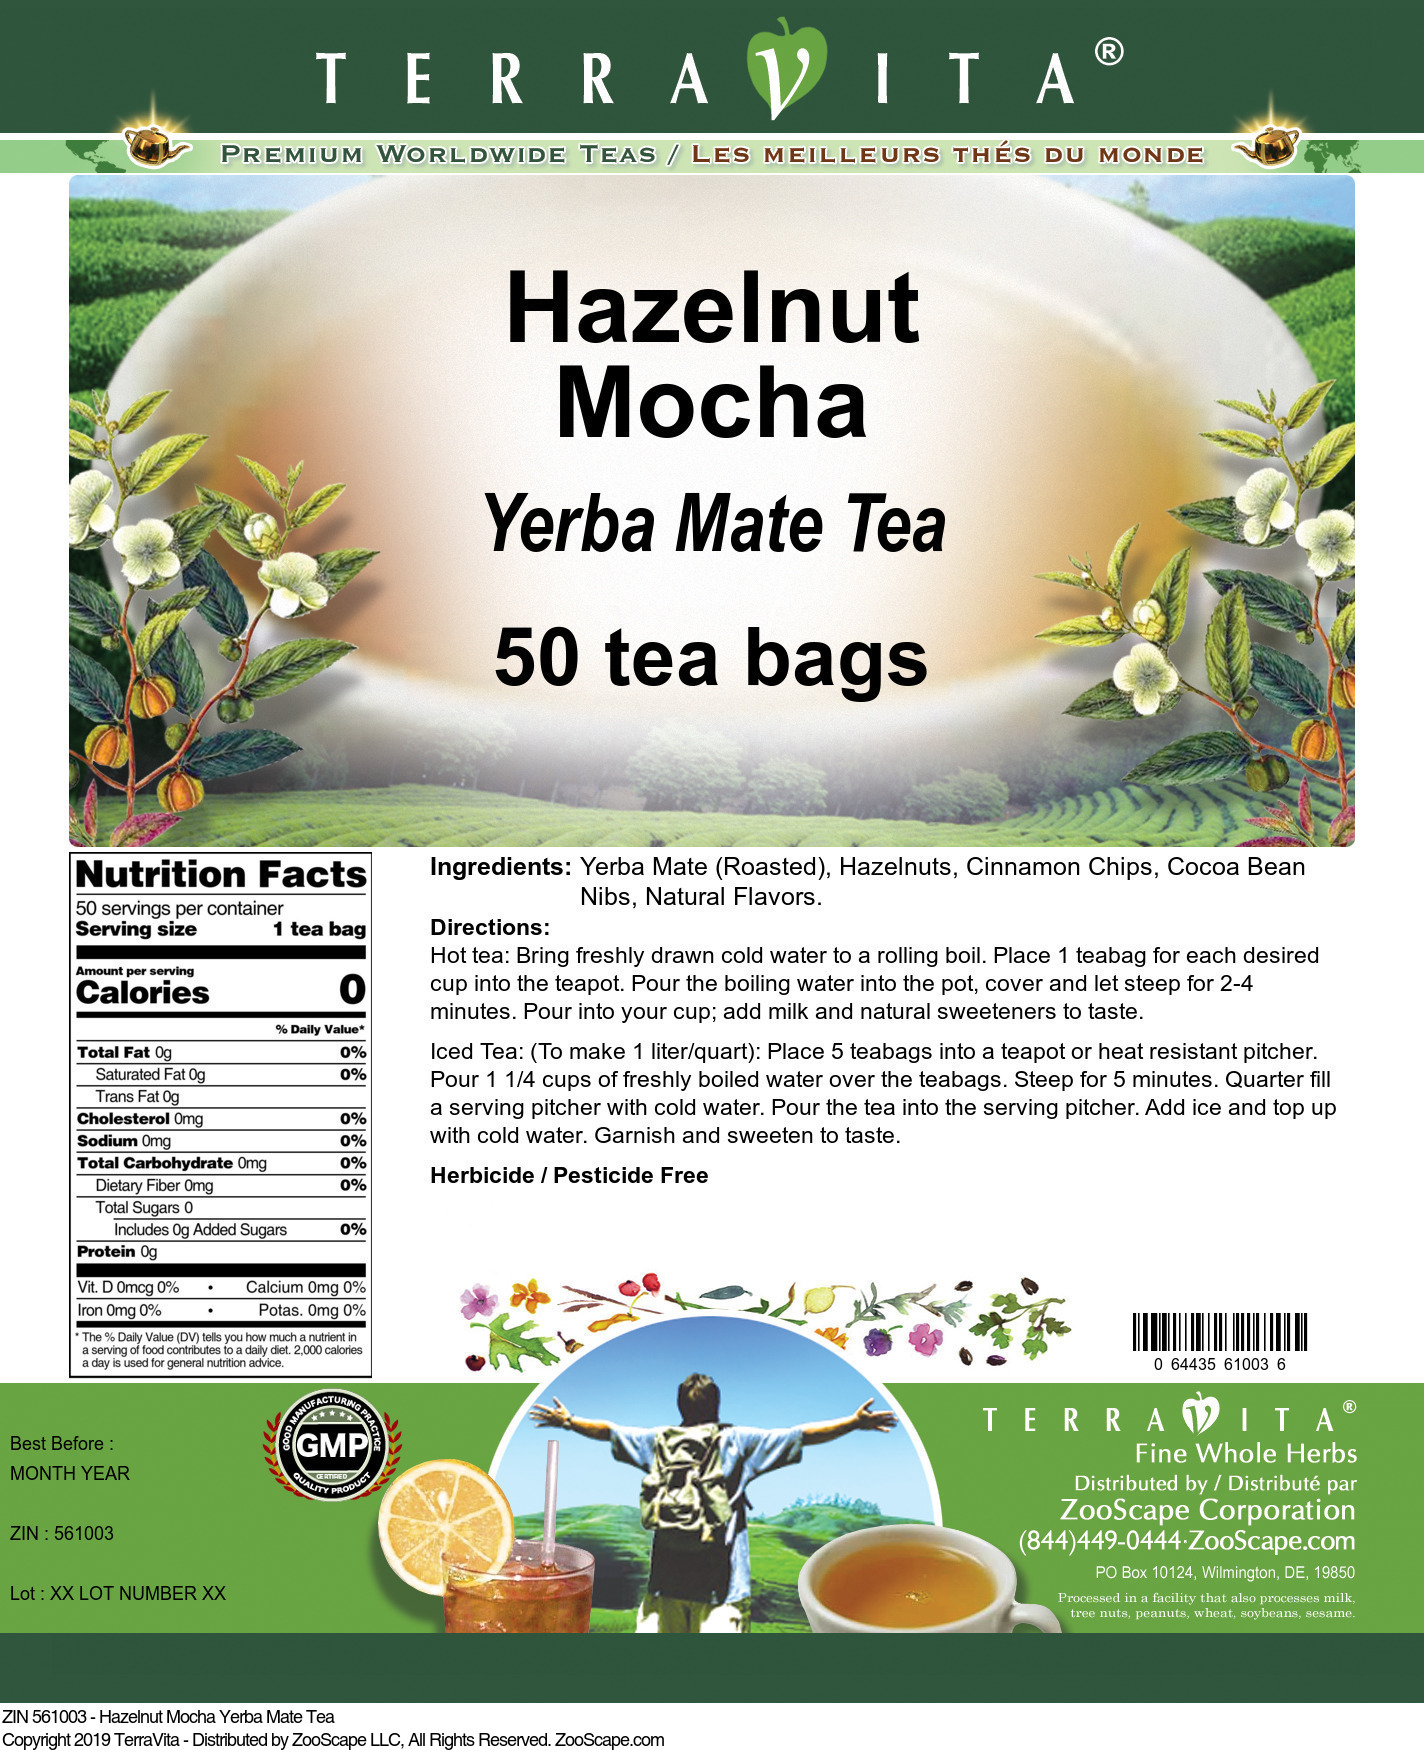 Hazelnut Mocha Yerba Mate Tea - Label